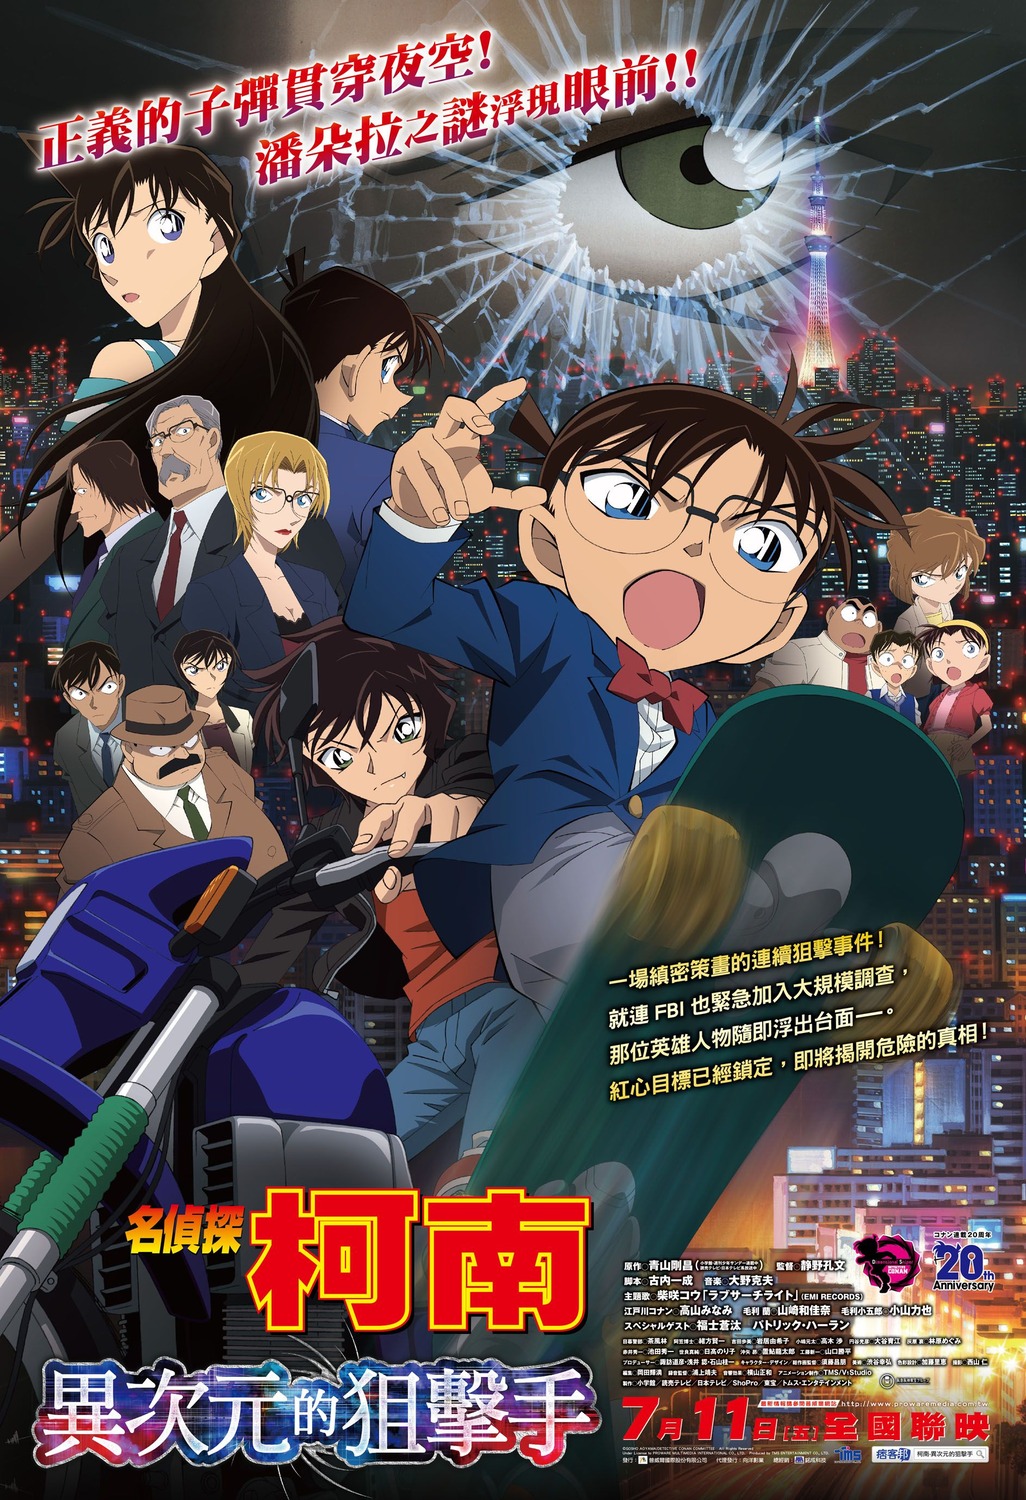 Extra Large Movie Poster Image for Meitantei Conan: Senritsu no furu sukoa 